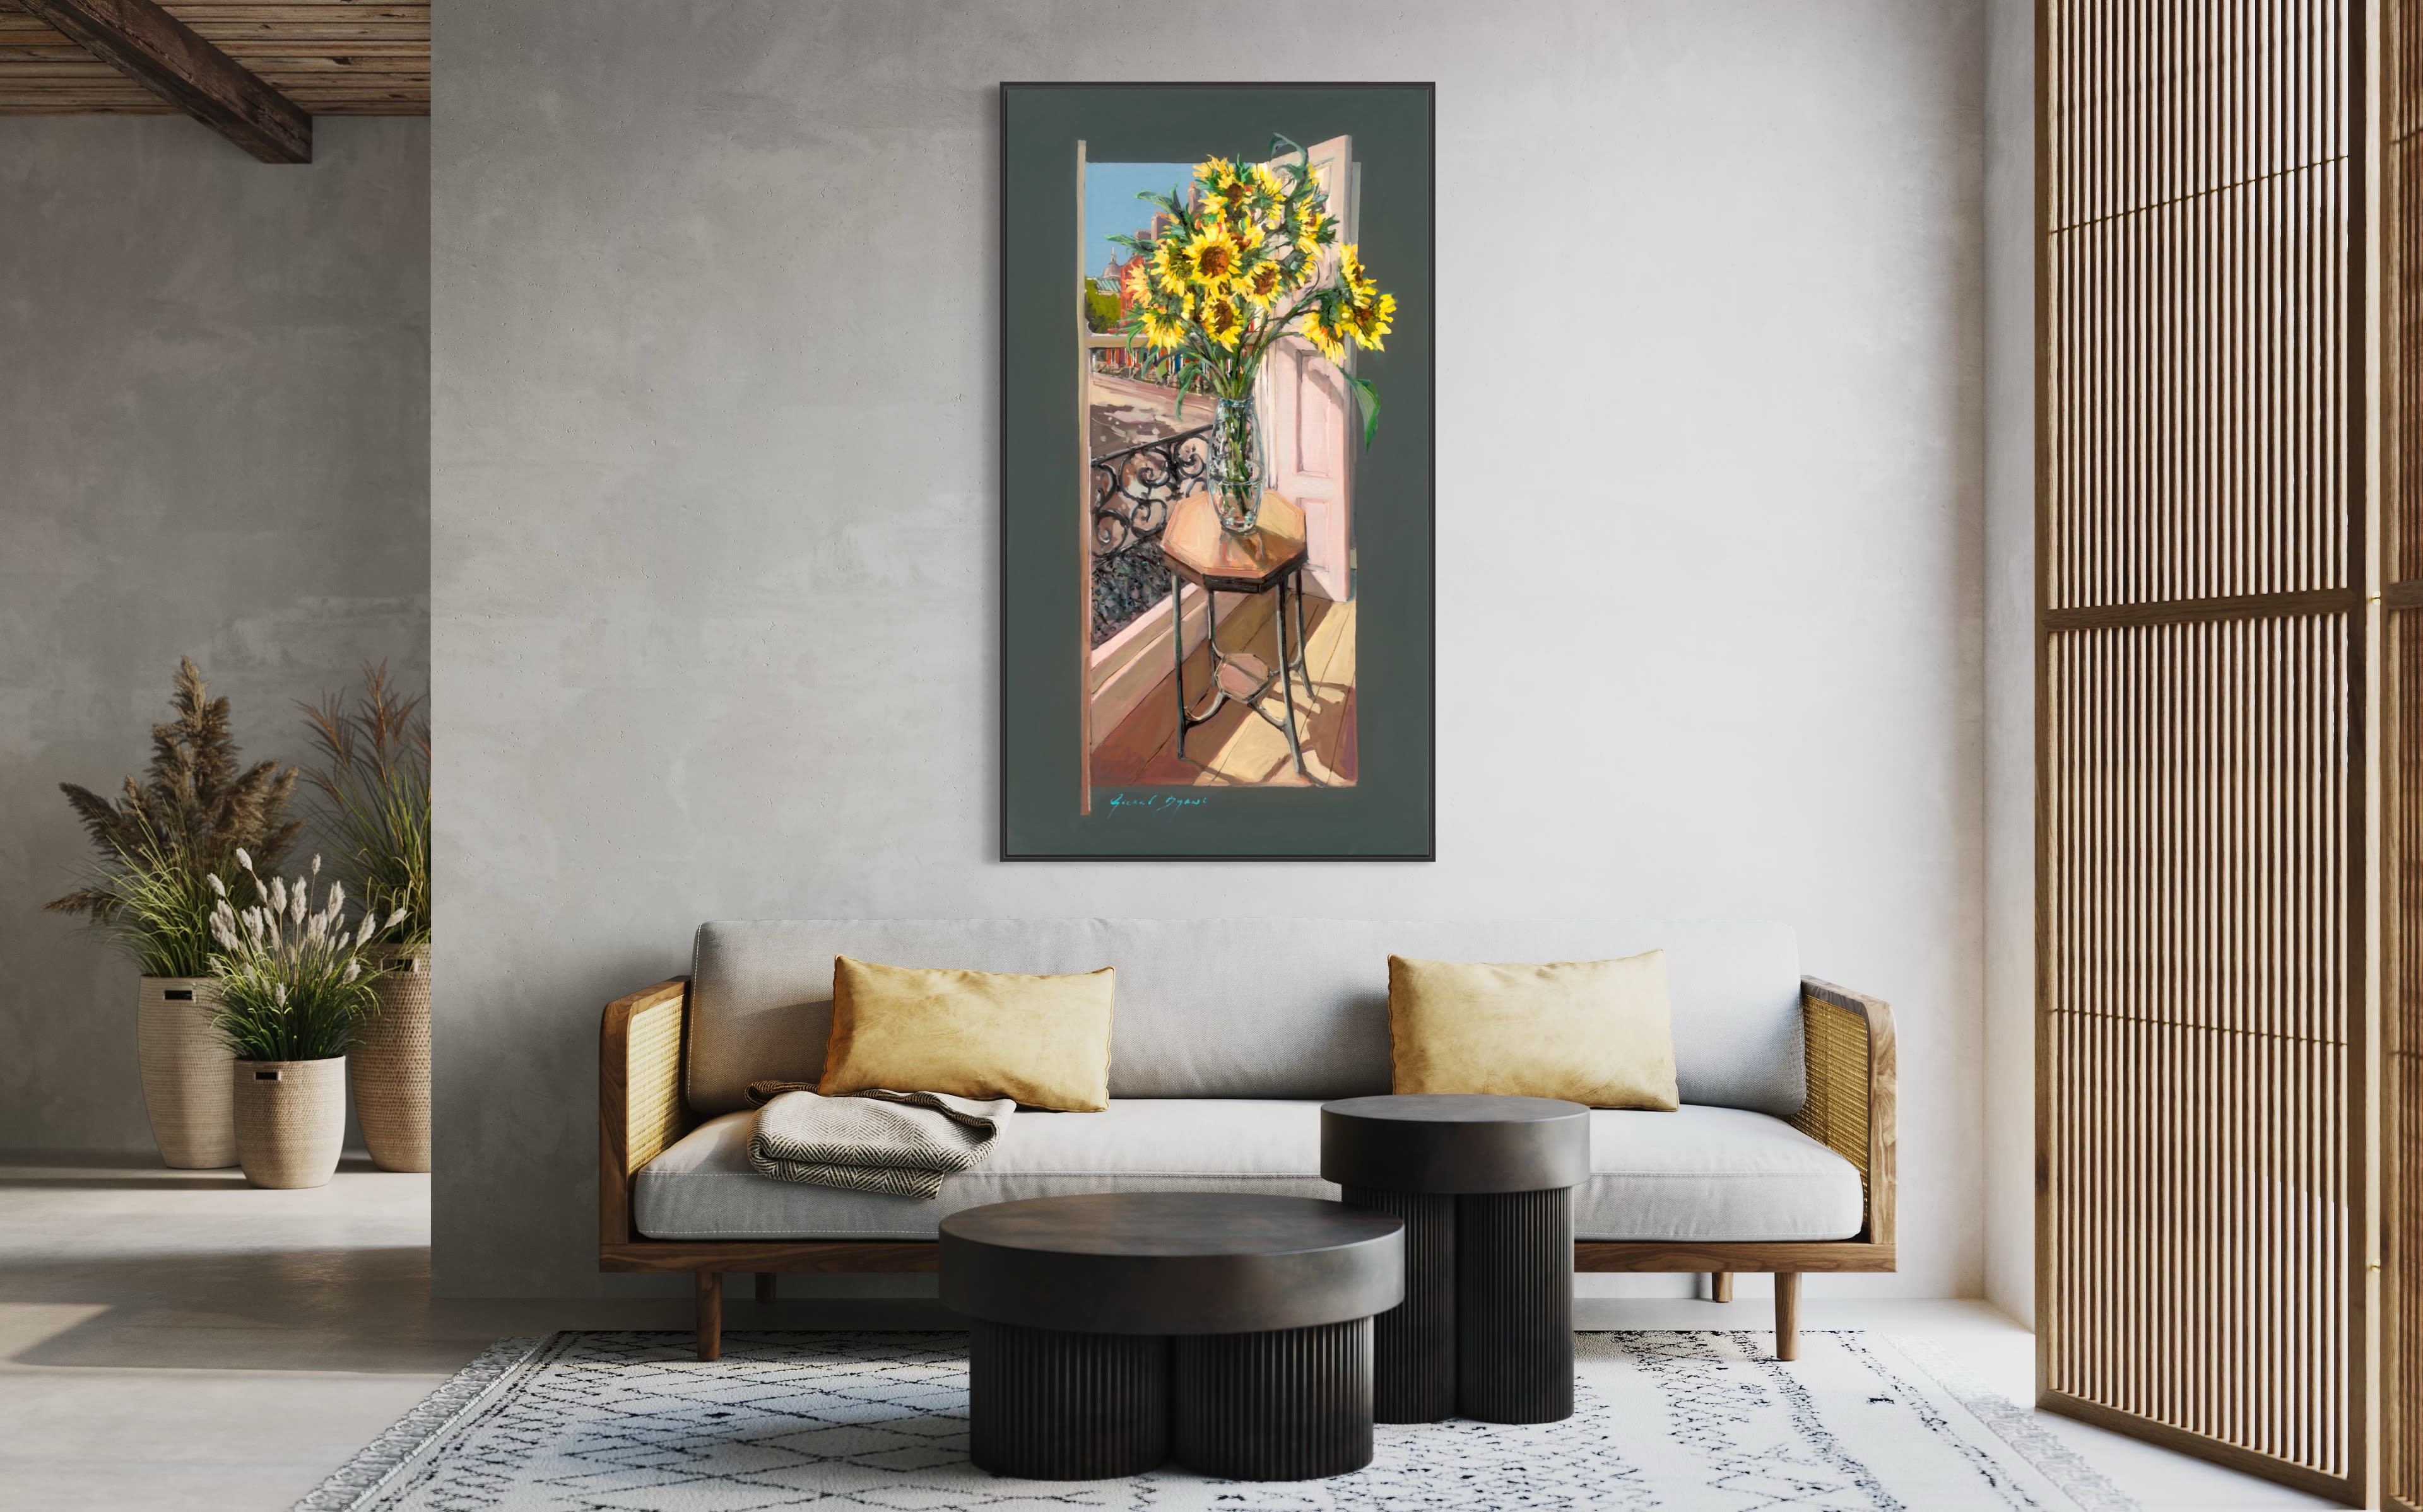 Gerard-Byrne-Wilde-Sunflowers-painting-artist-in-residence-Oscar-Wilde-House-Dublin